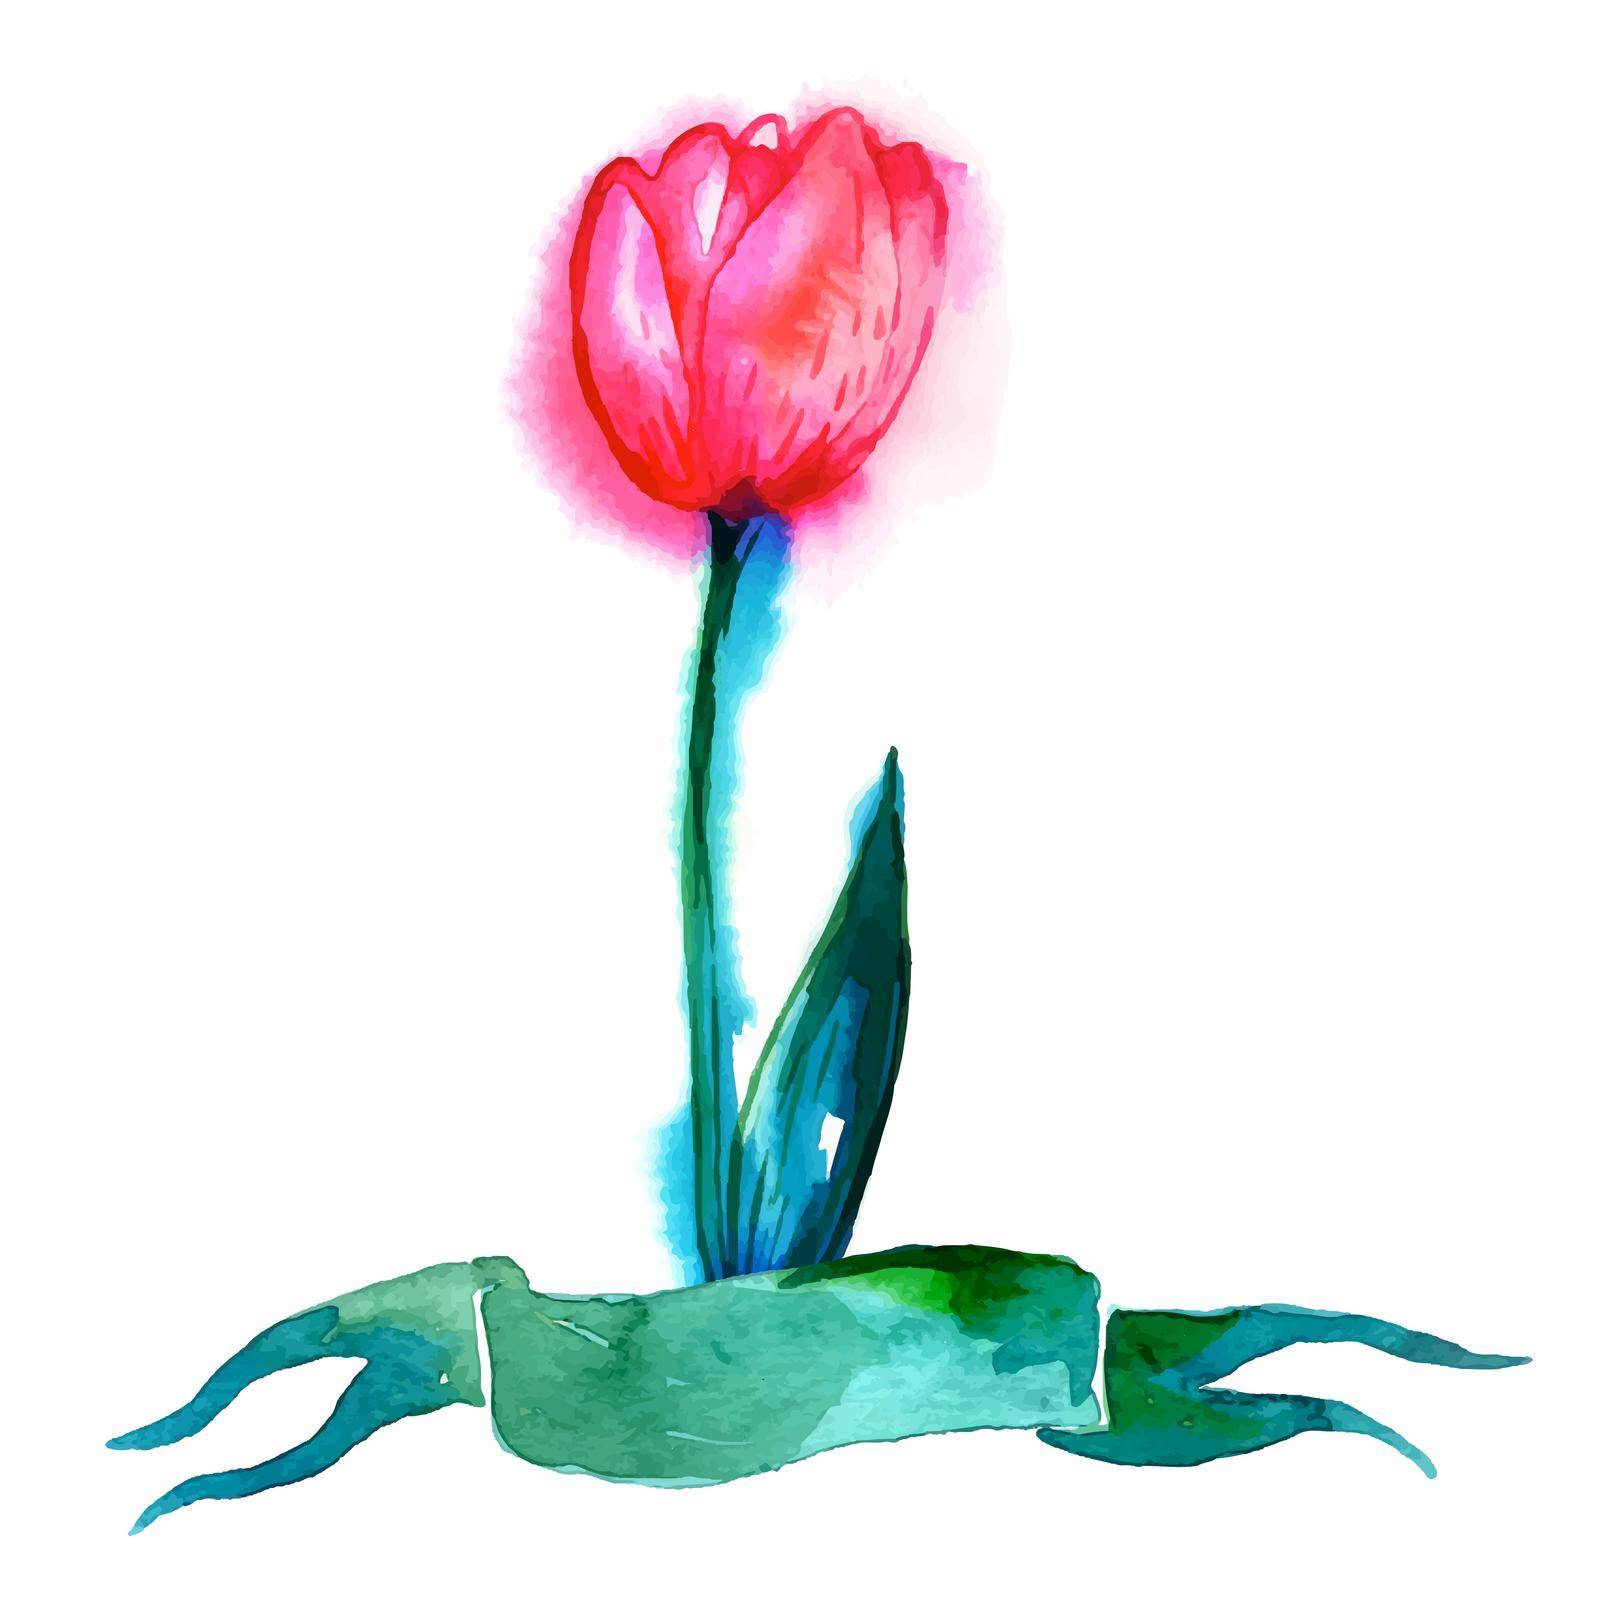 Tulip and ribbon. Watercolor illustration.